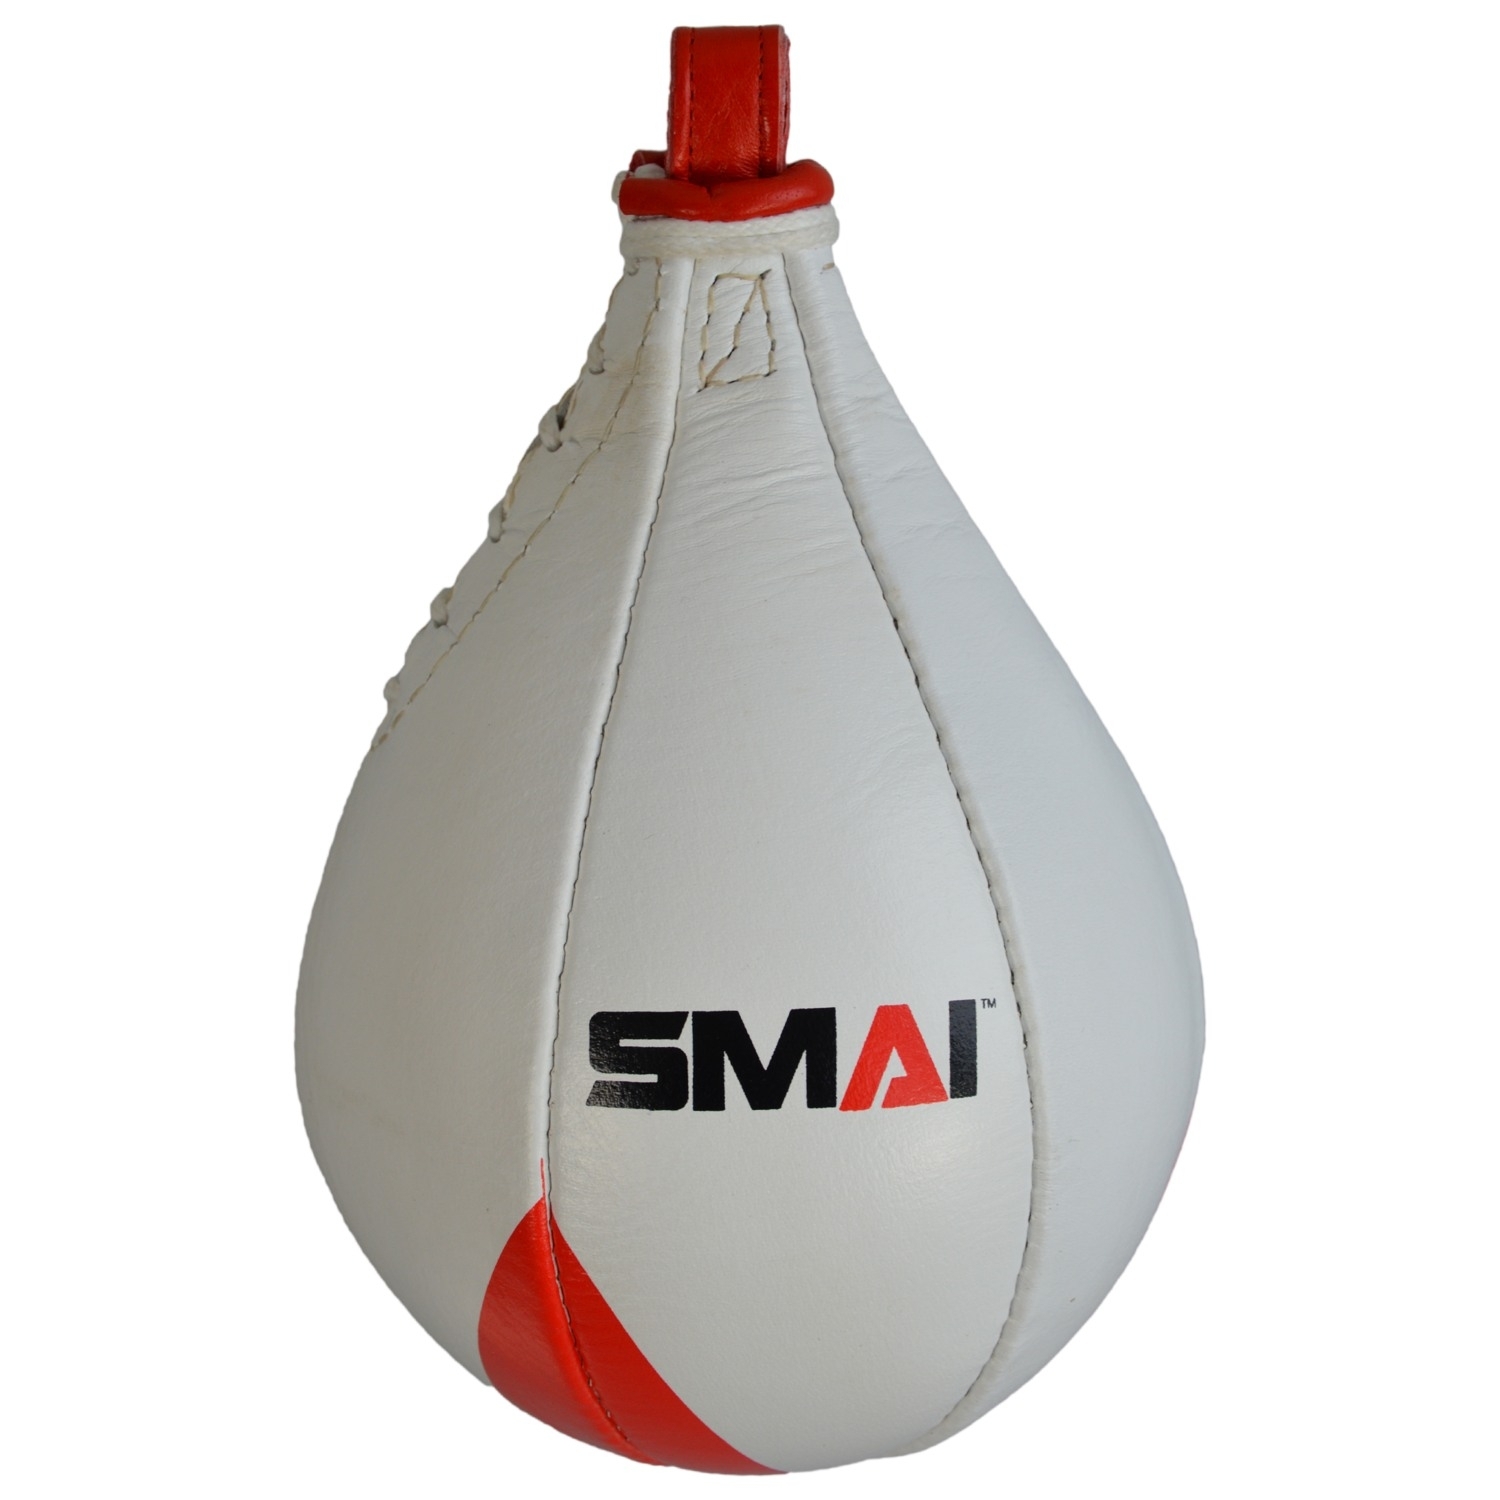 SMAI Boxbirne Leder weiß-rot, 25 cm